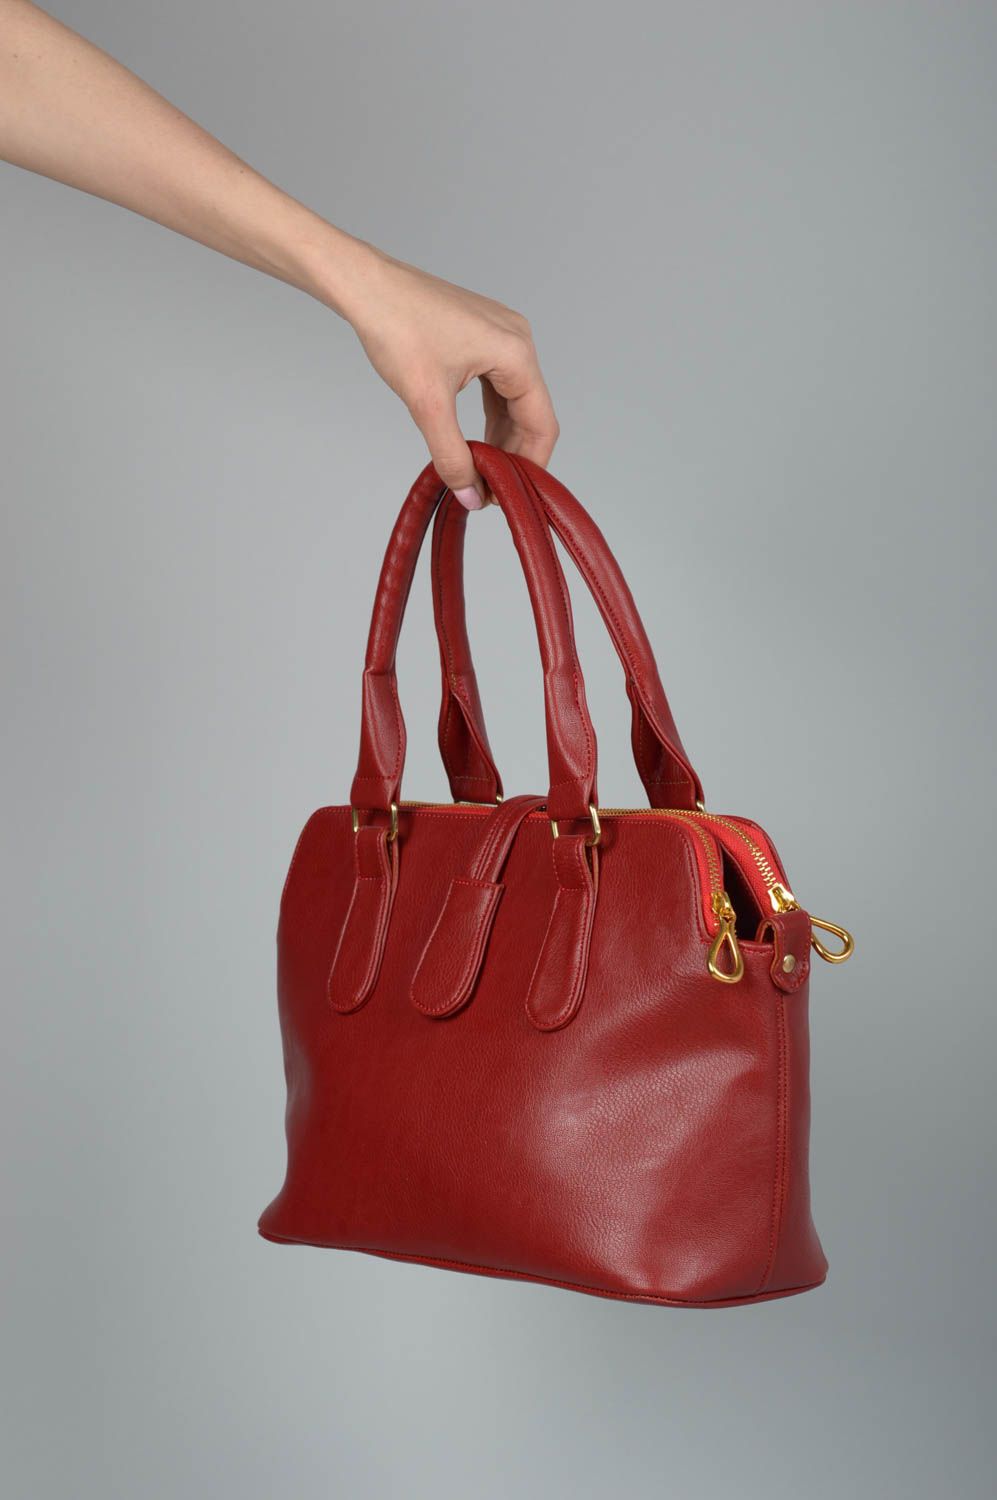 Handmade leatherette shoulder bag fashion accessories stylish bordeaux bag photo 3